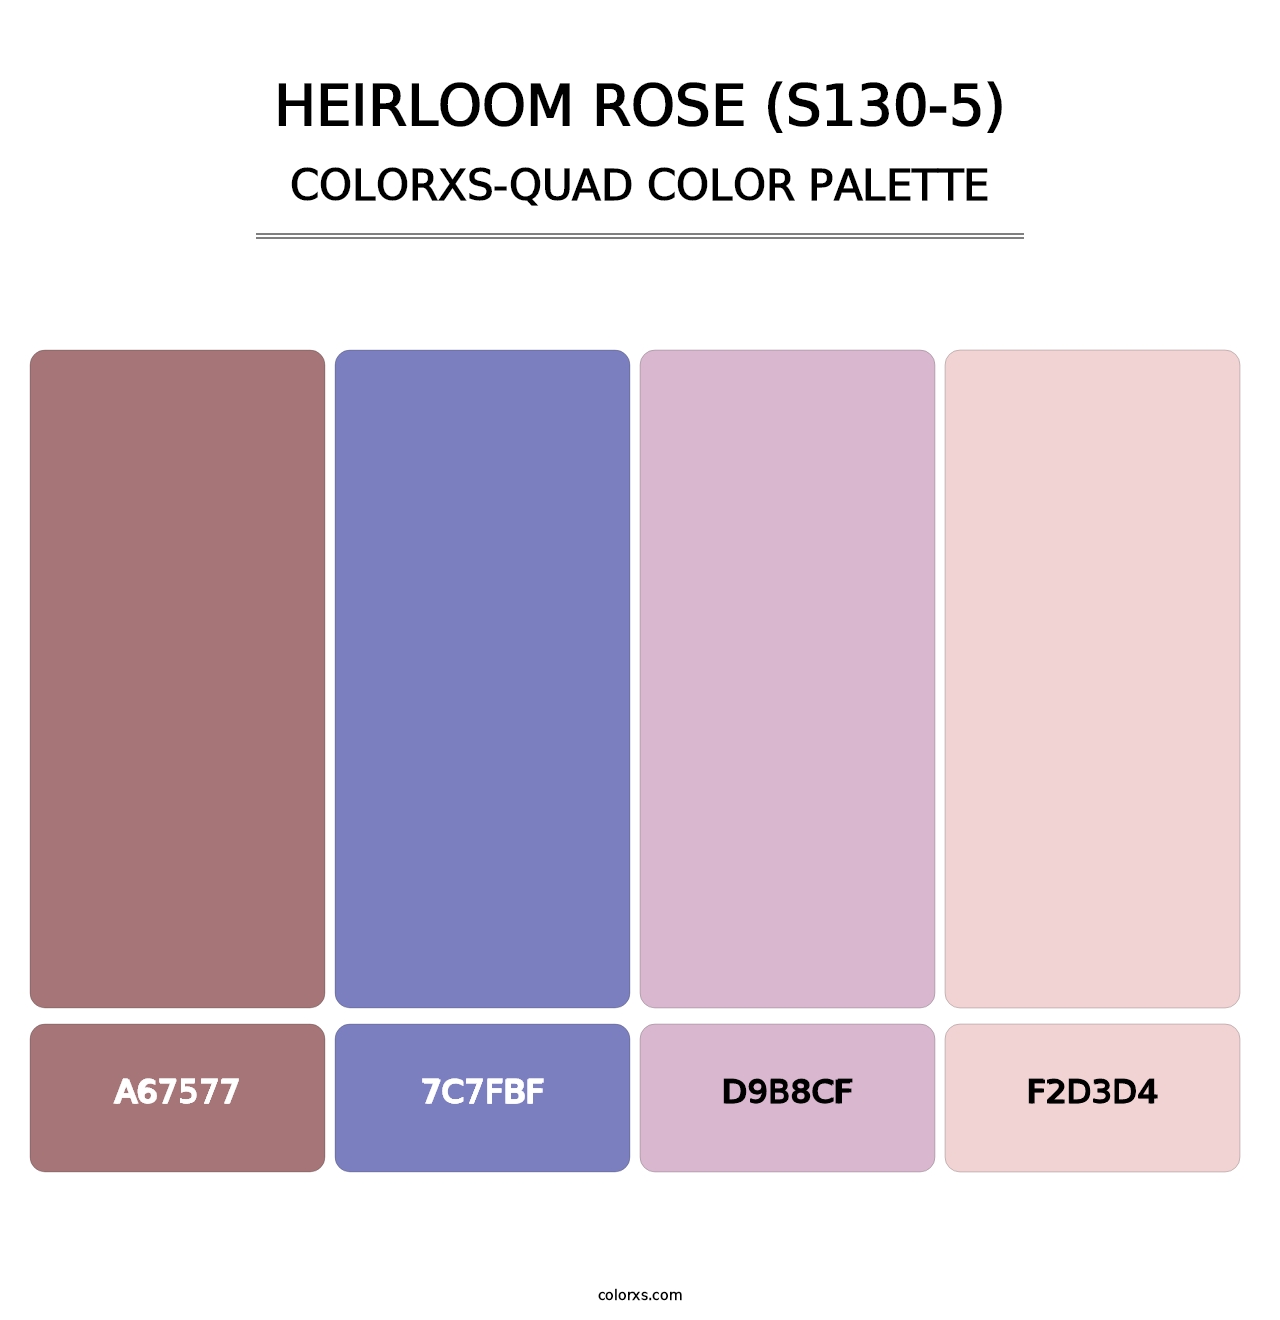 Heirloom Rose (S130-5) - Colorxs Quad Palette